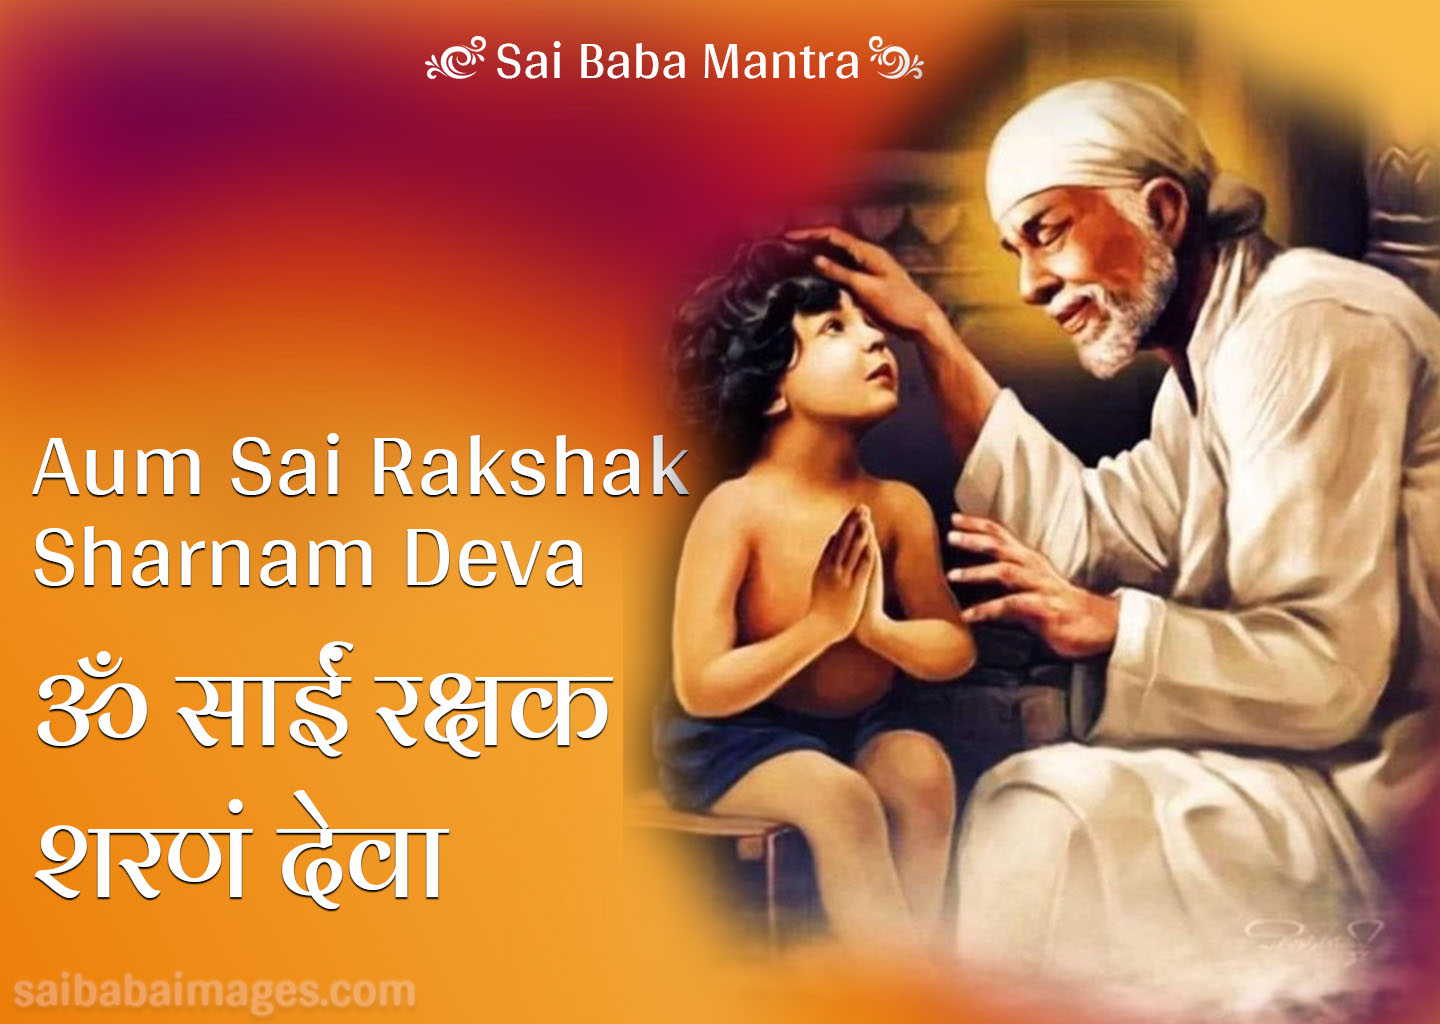 Sai Baba Mantra for Healing